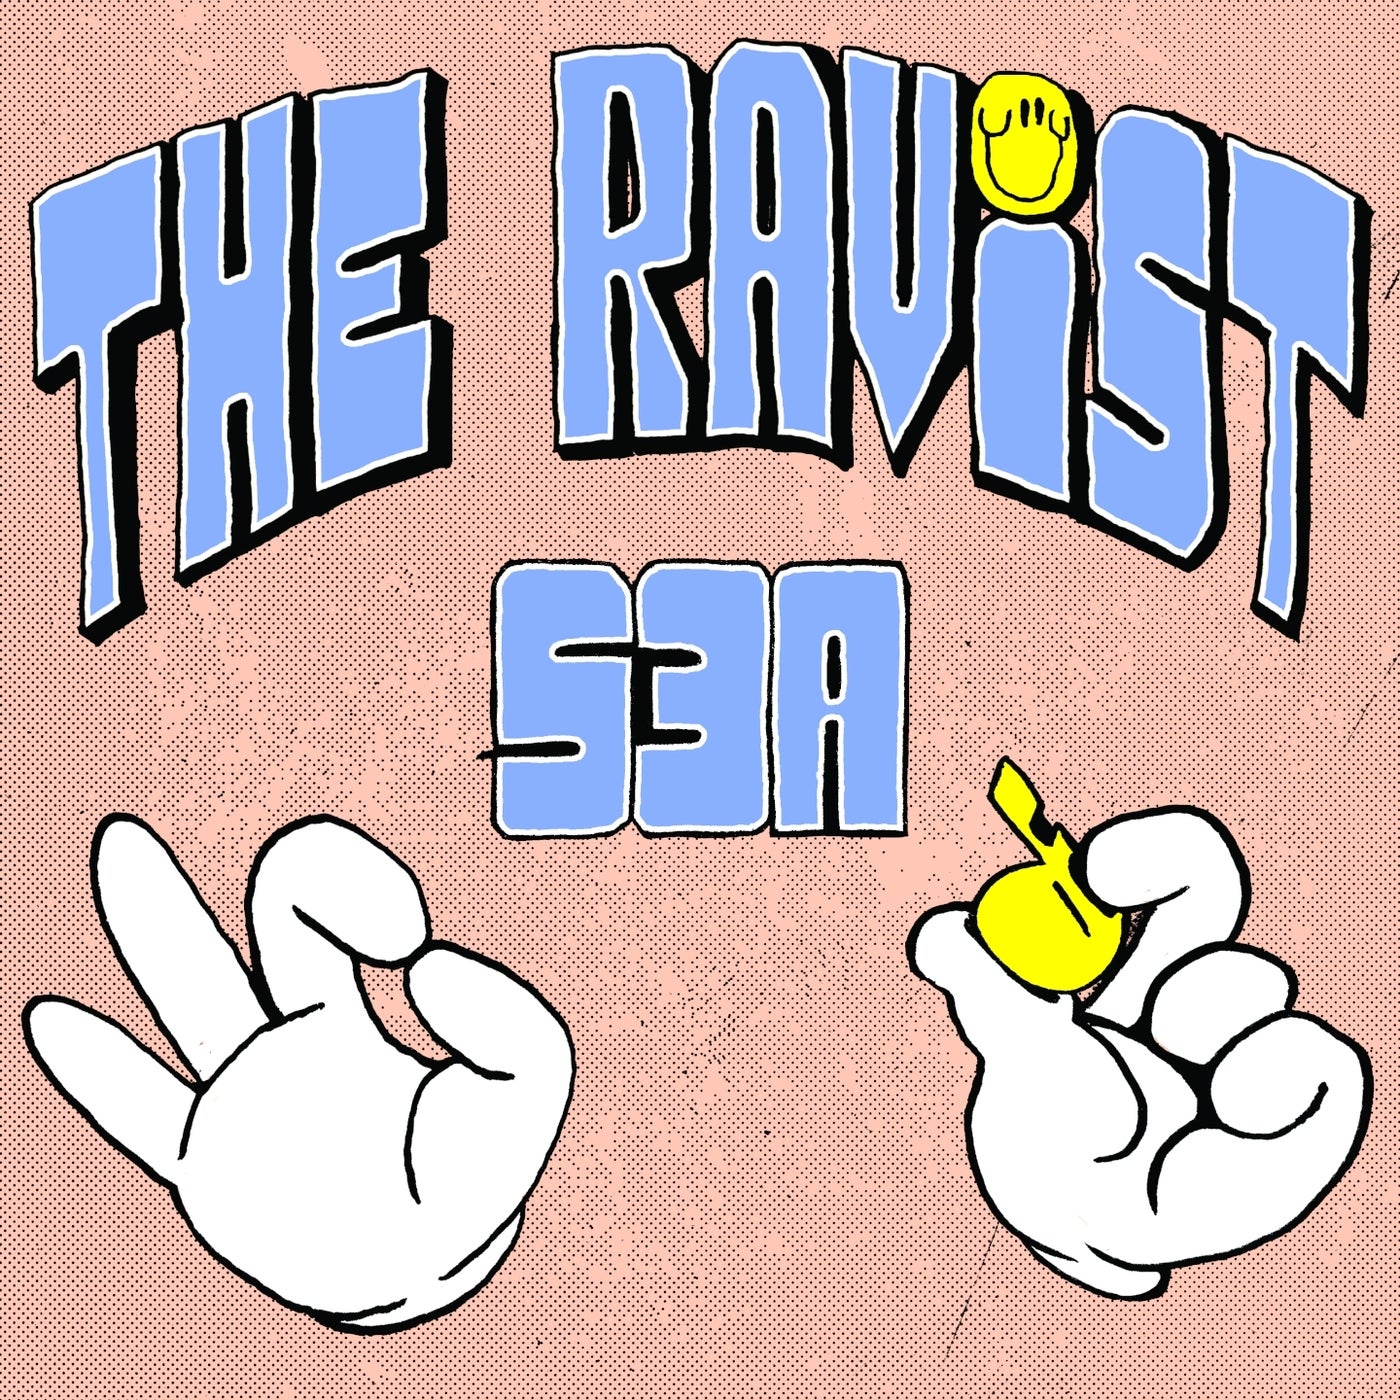 The Ravist